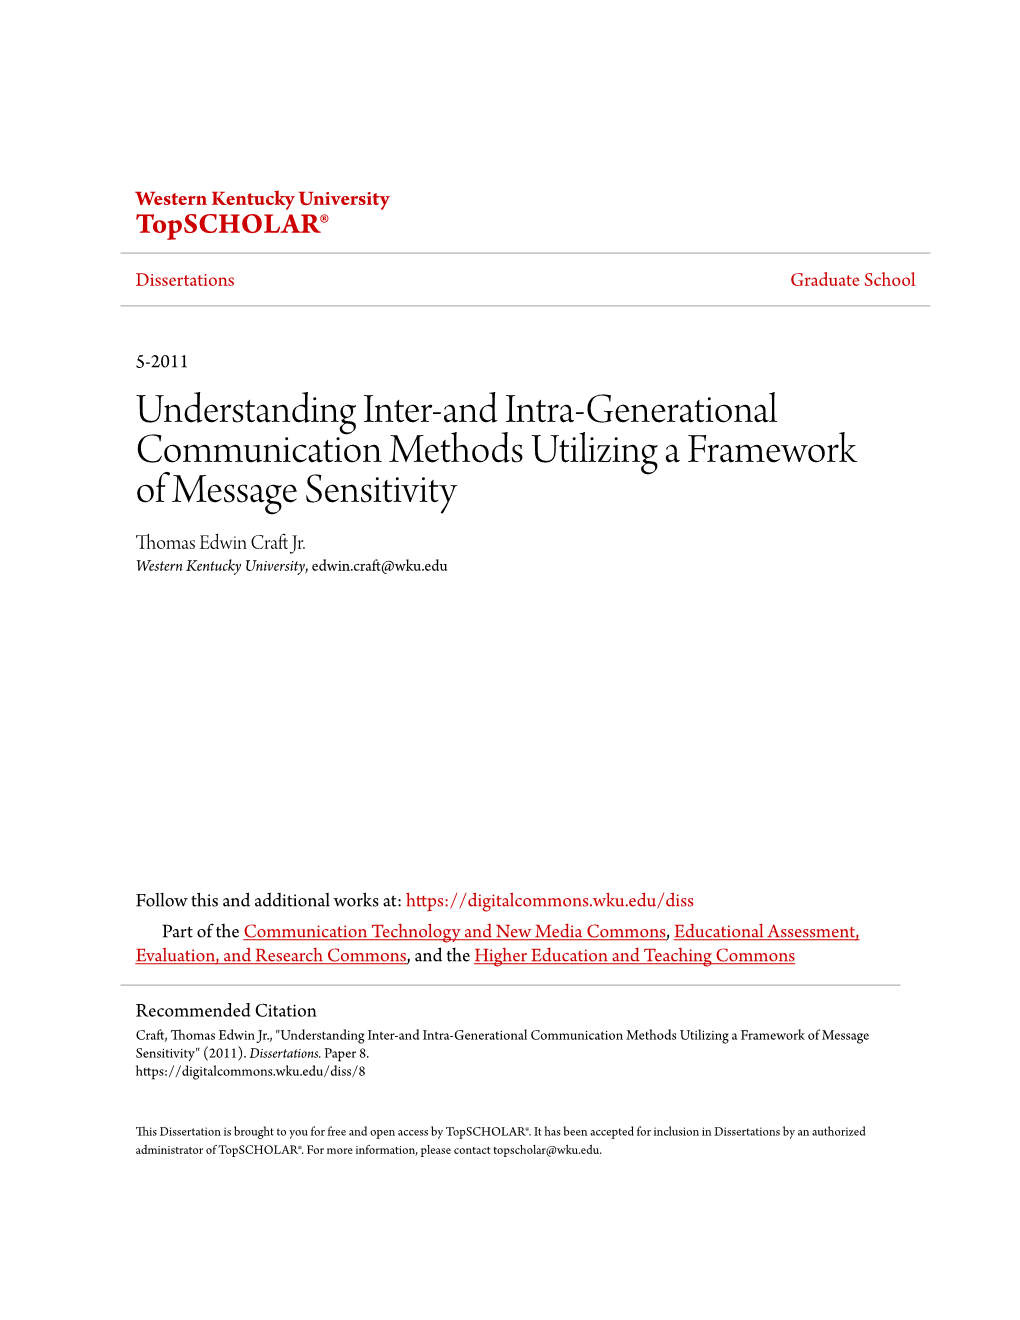 Understanding Inter-And Intra-Generational Communication Methods Utilizing a Framework of Message Sensitivity Thomas Edwin Craft Rj